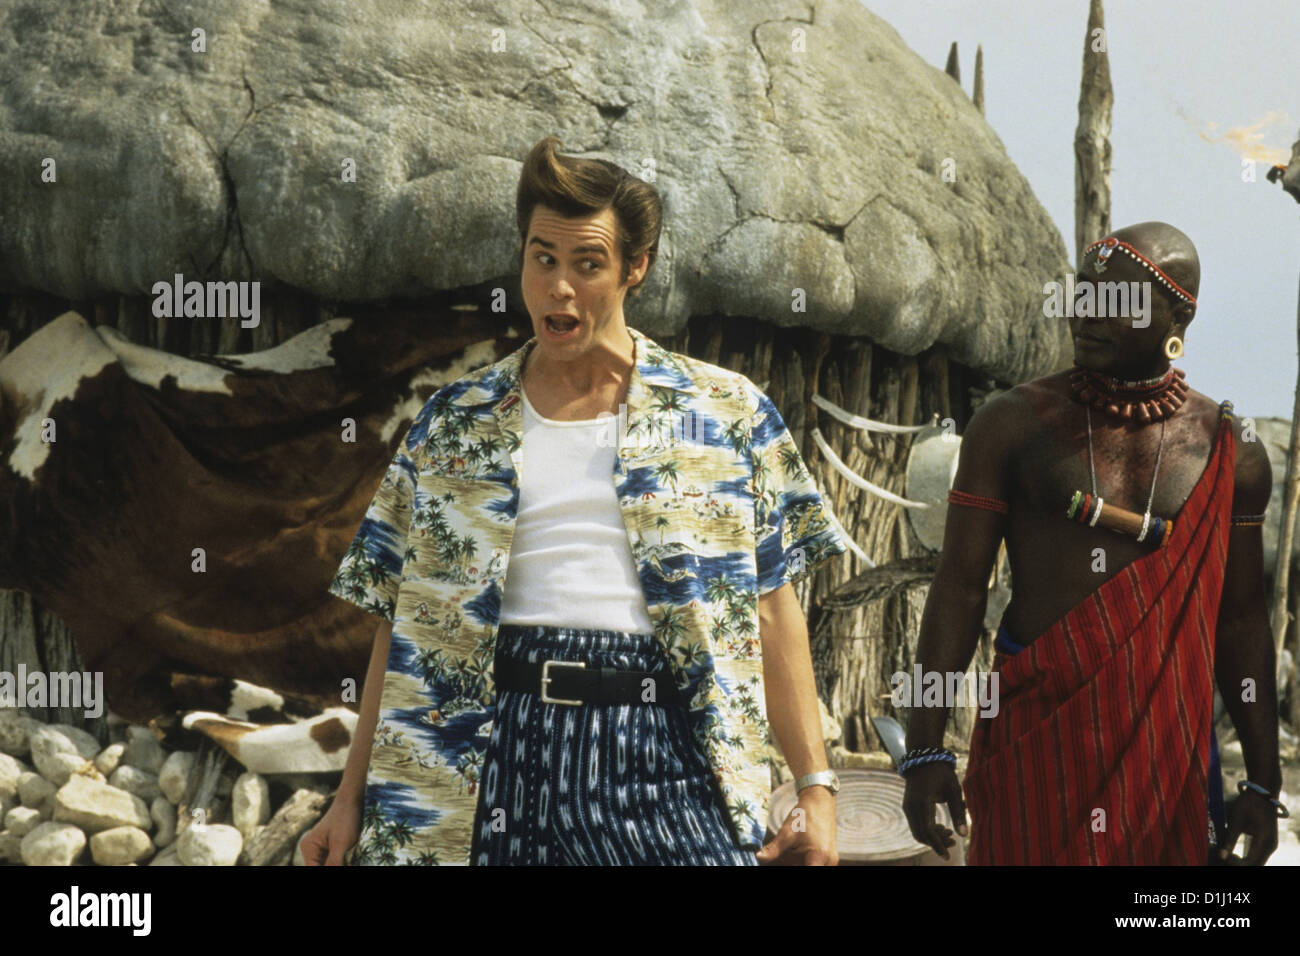 Ace Ventura - Jetzt Wird's Wild   Ace Ventura: When Nature Calls   Szenenbild  -- Stock Photo